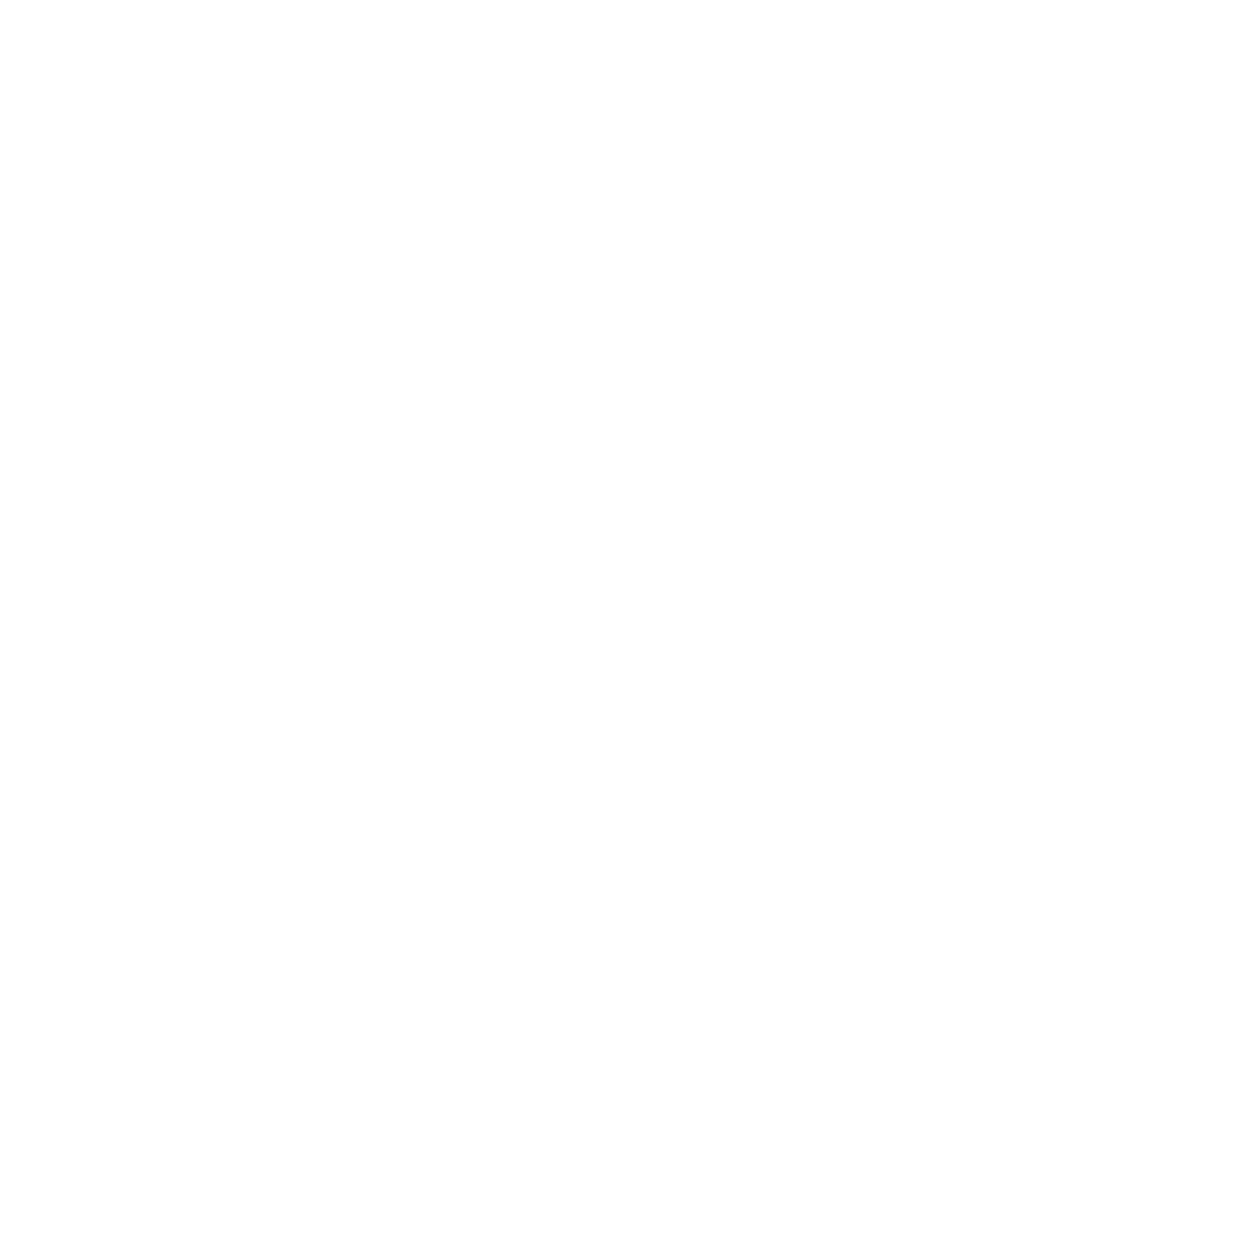 HWAGUO ELECTRICAL MACHINERY CO., LTD.